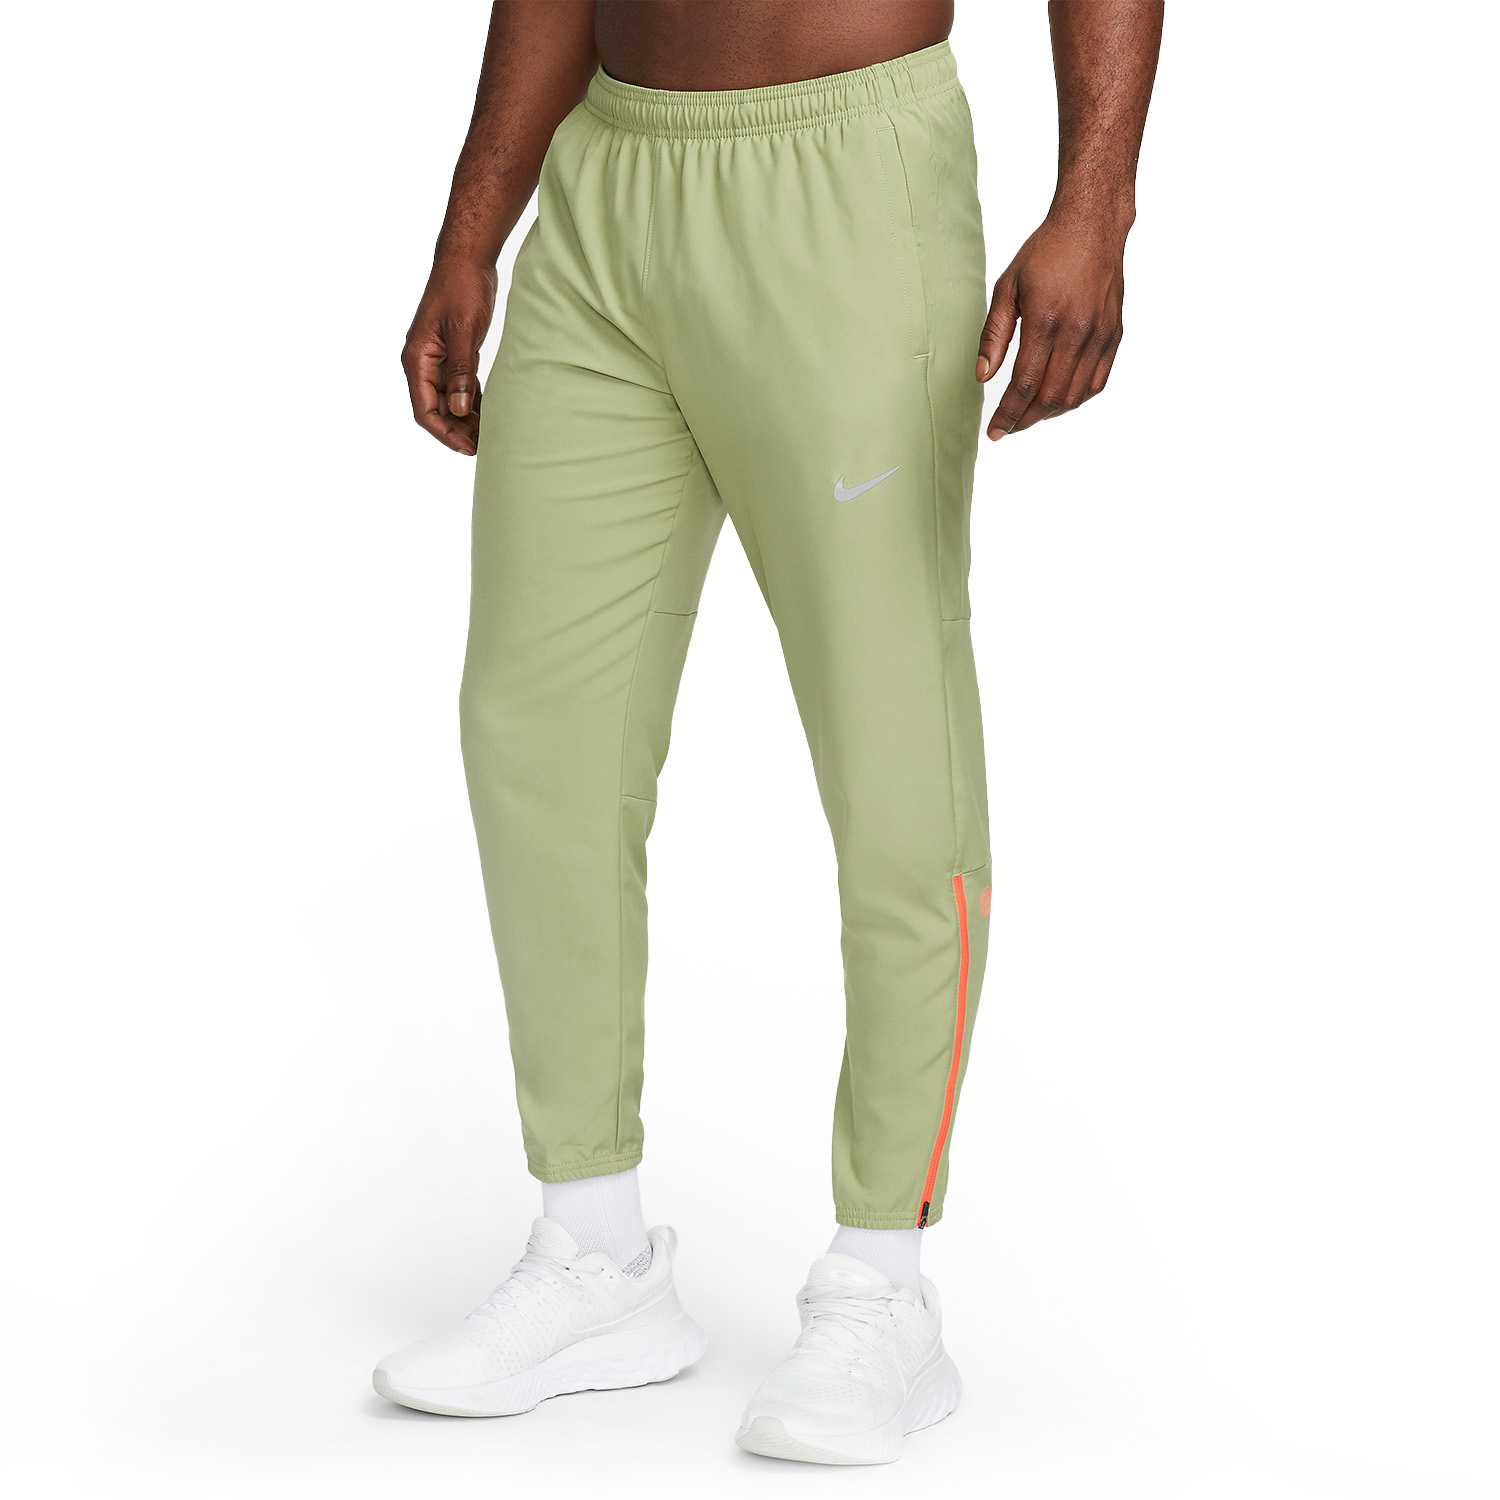 Nike Dri-FIT Challenger Men's Running Pants - Alligator